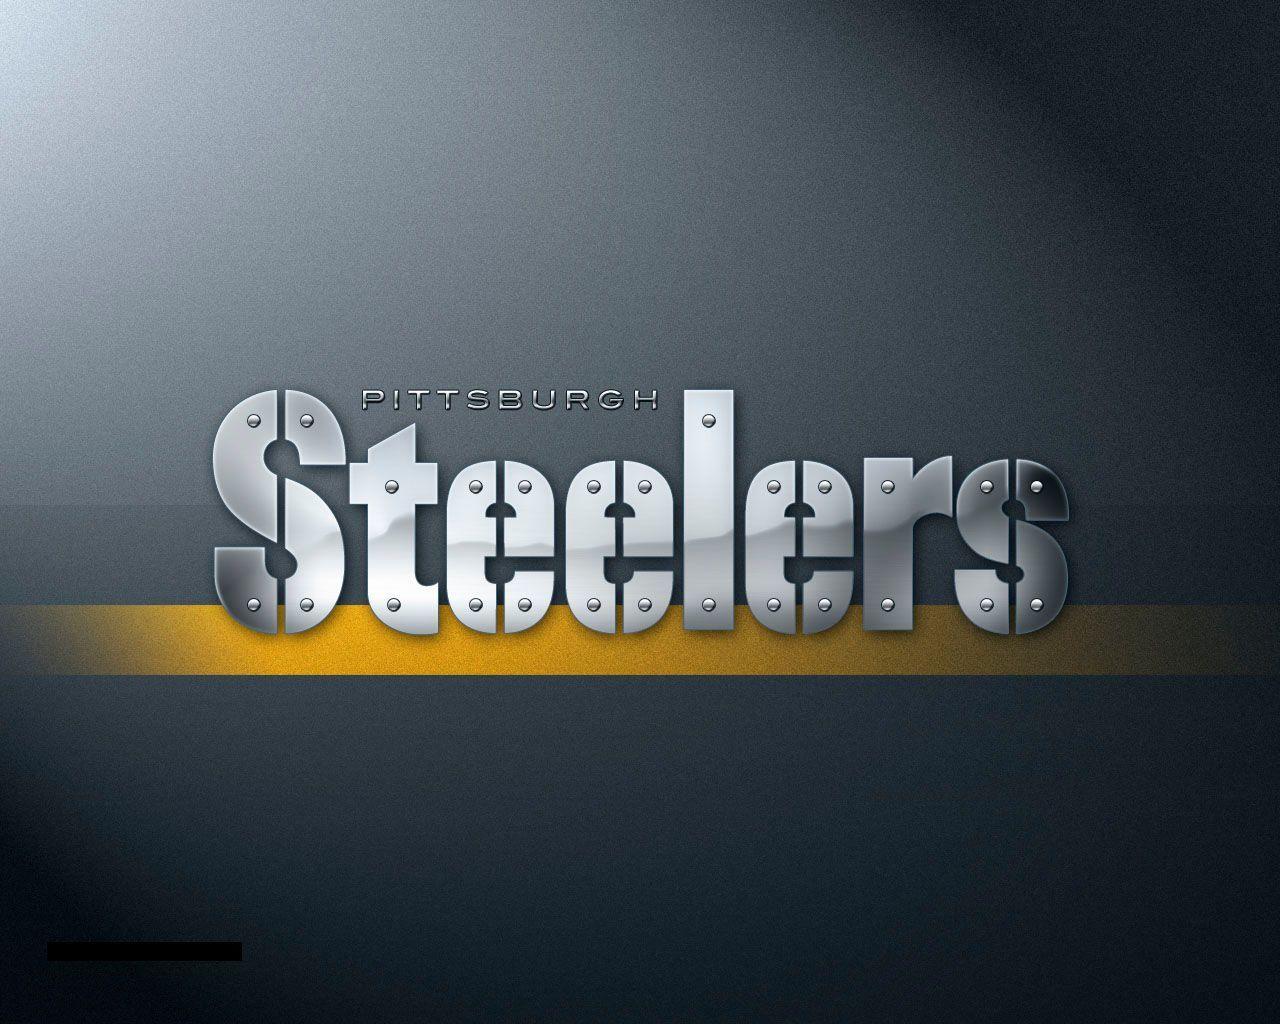 Pittsburgh Steelers Wallpaper 9 HD Wallpaper Free